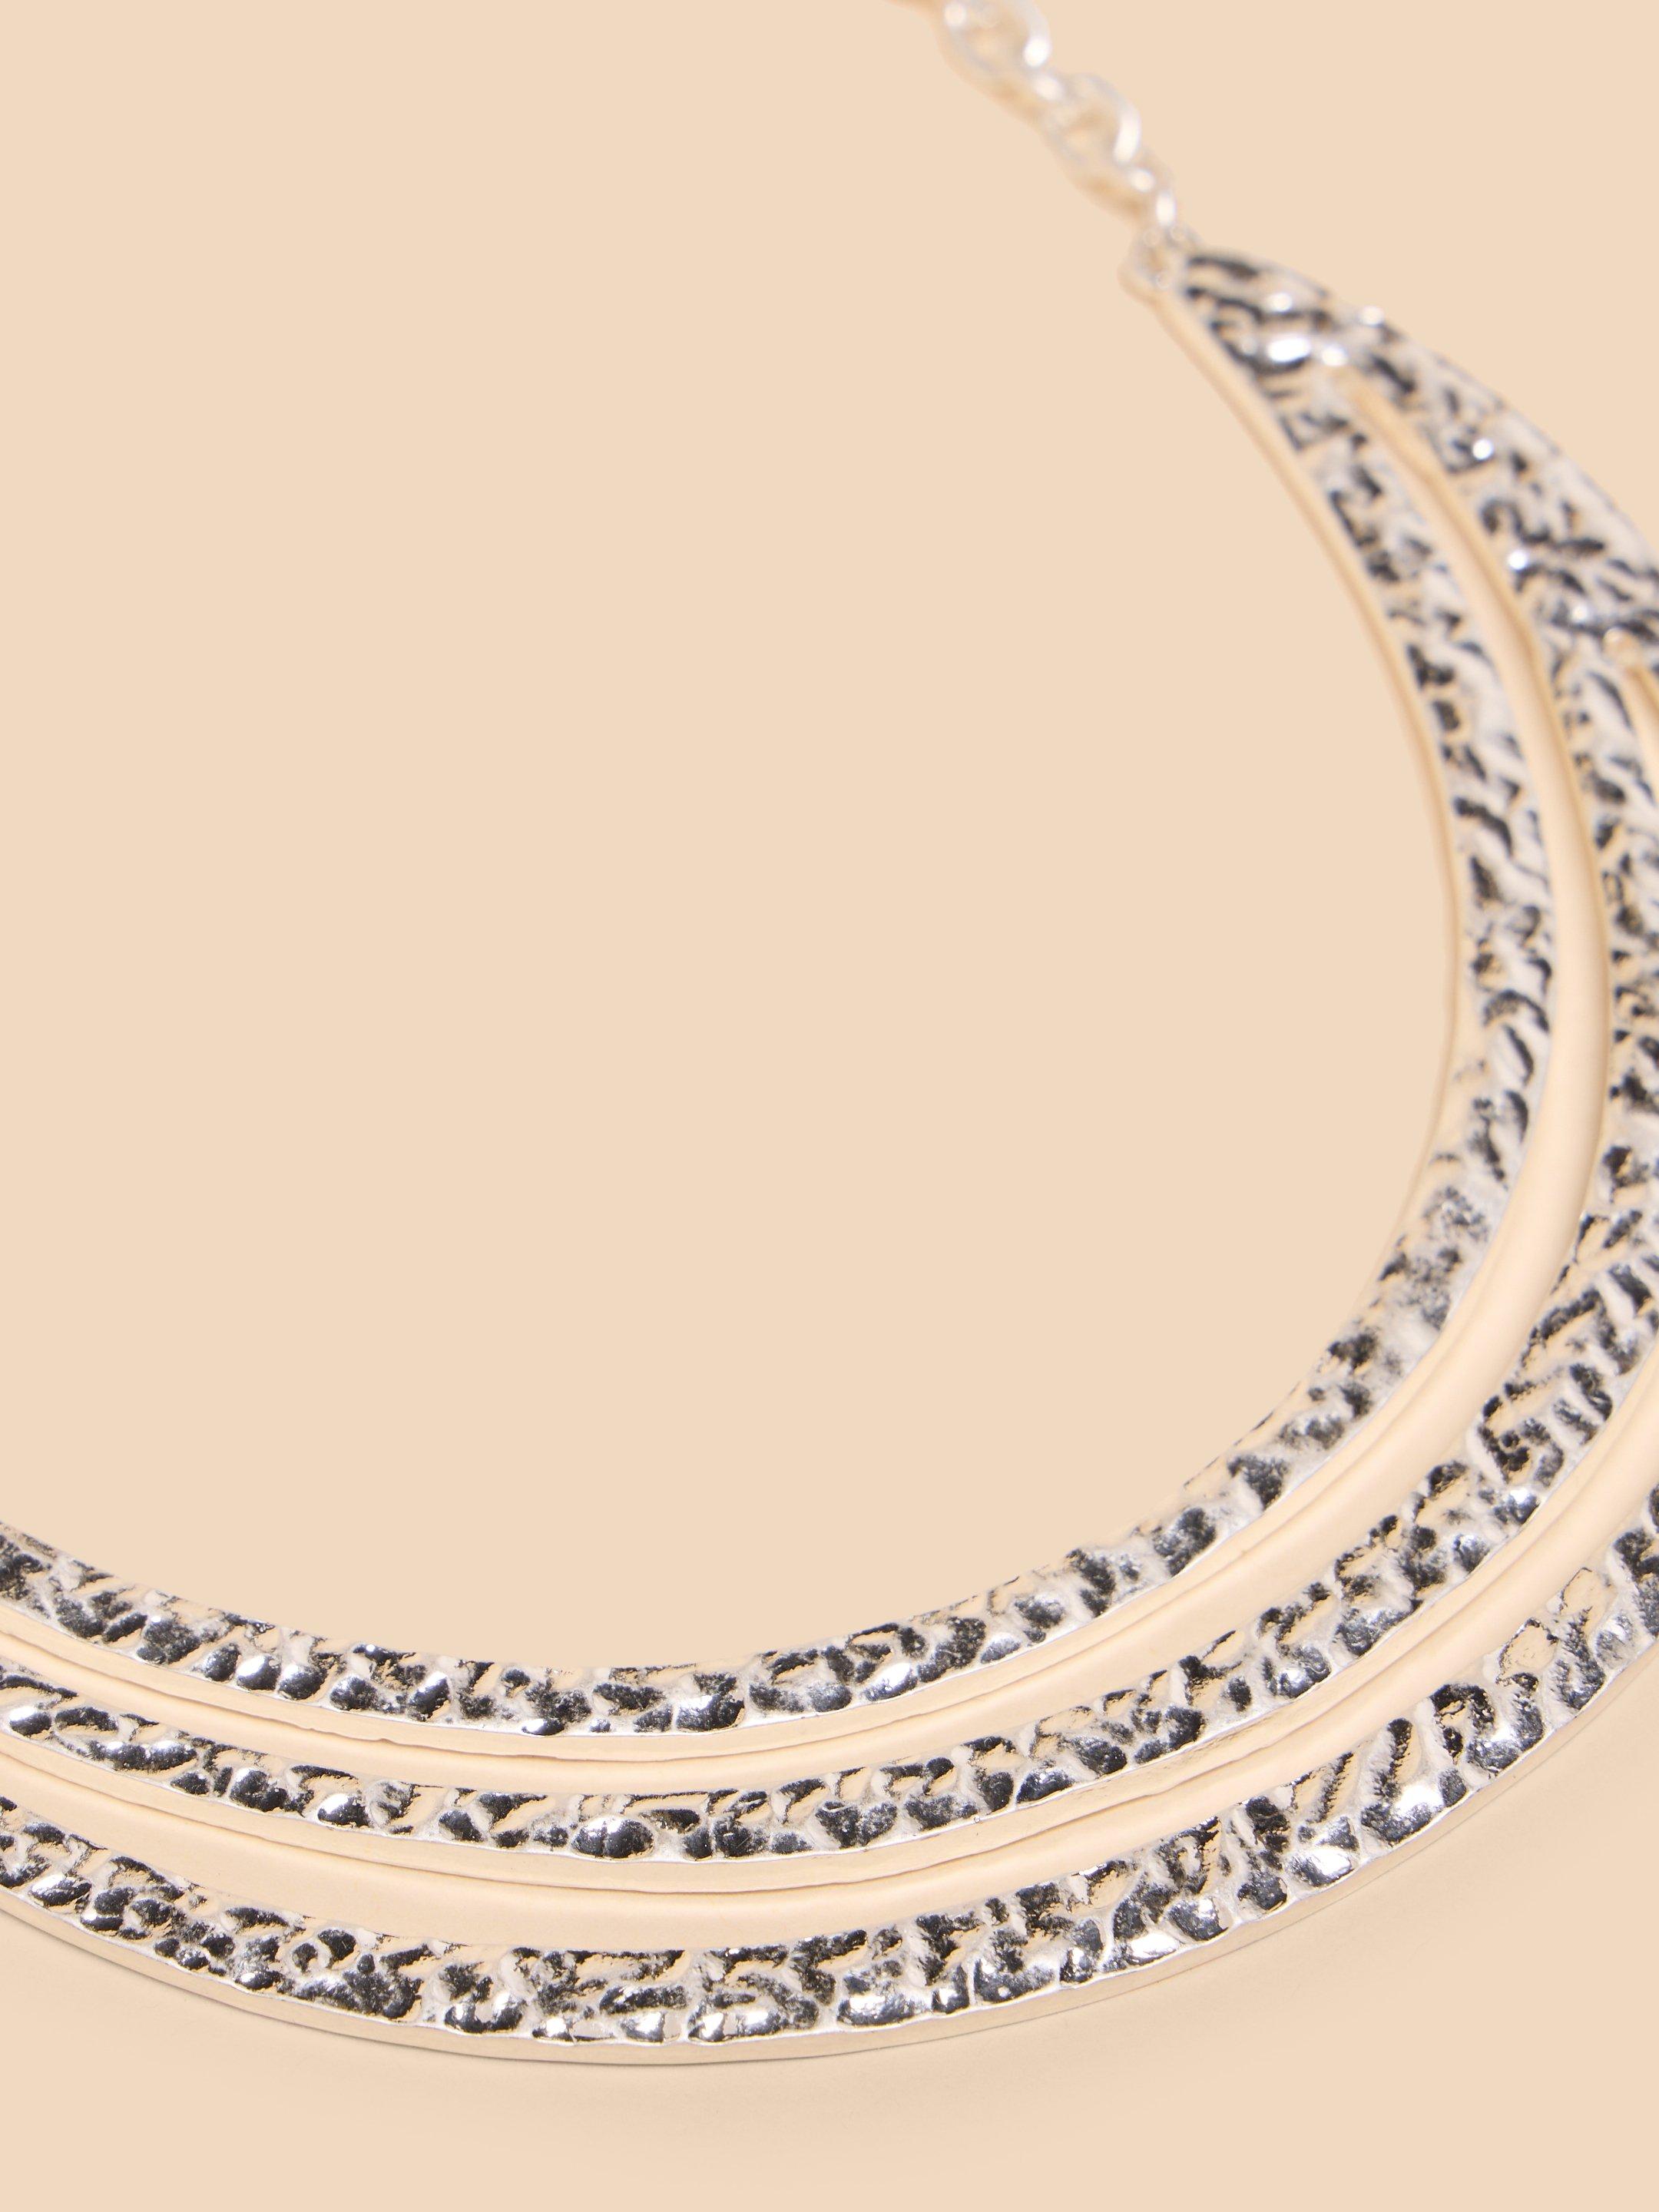 Mia Crescent Necklace in SLV TN MET - FLAT DETAIL